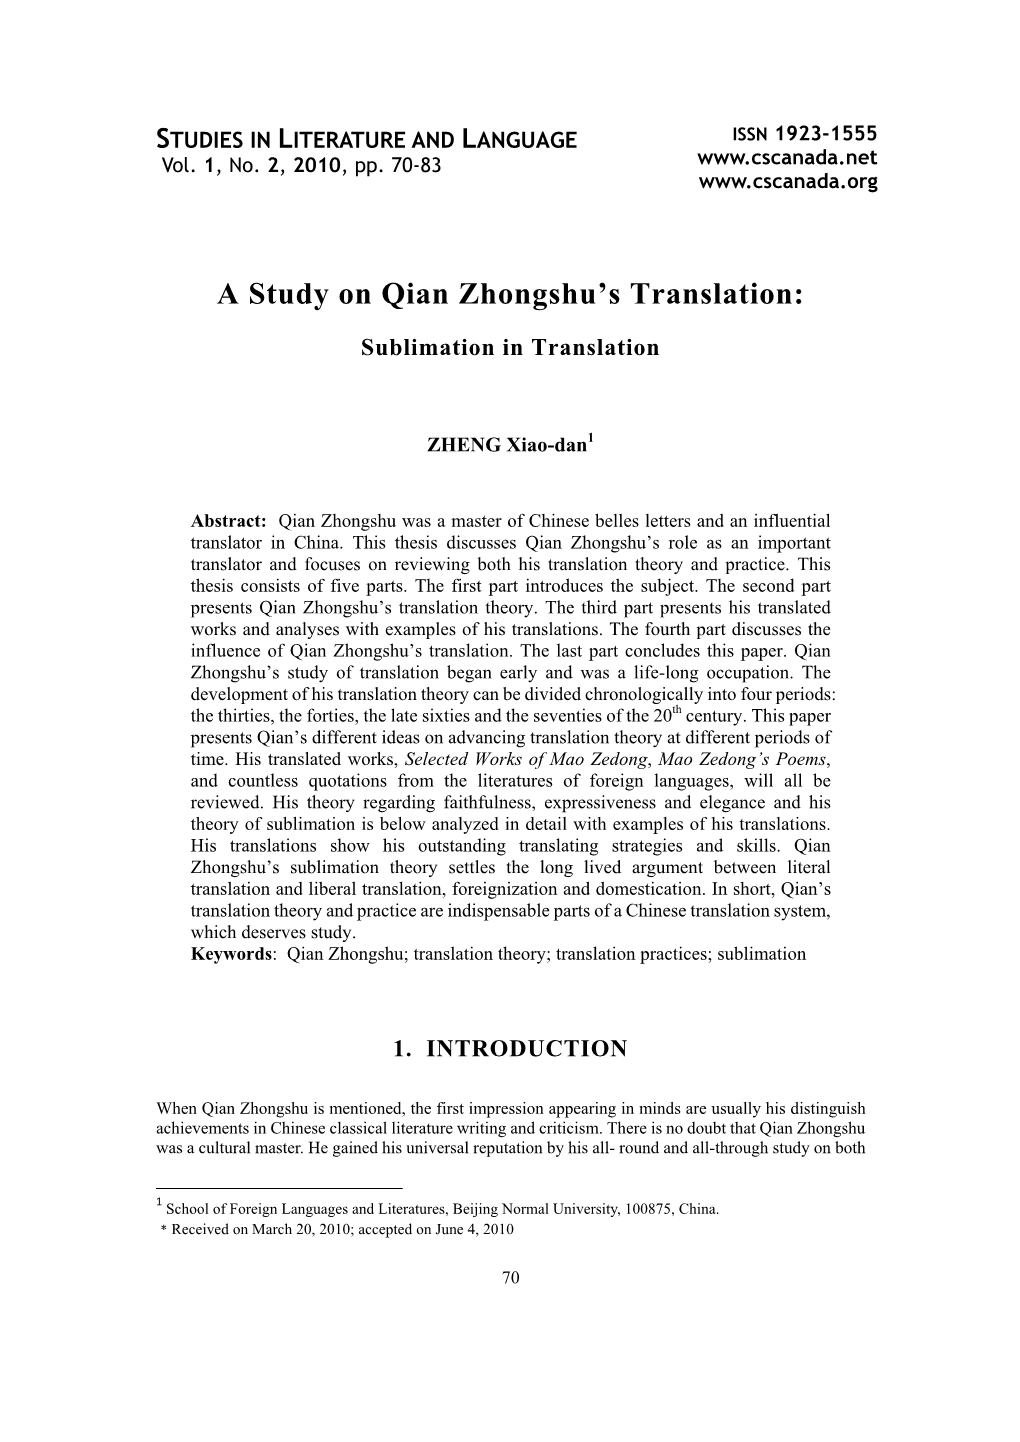 A Study on Qian Zhongshu's Translation